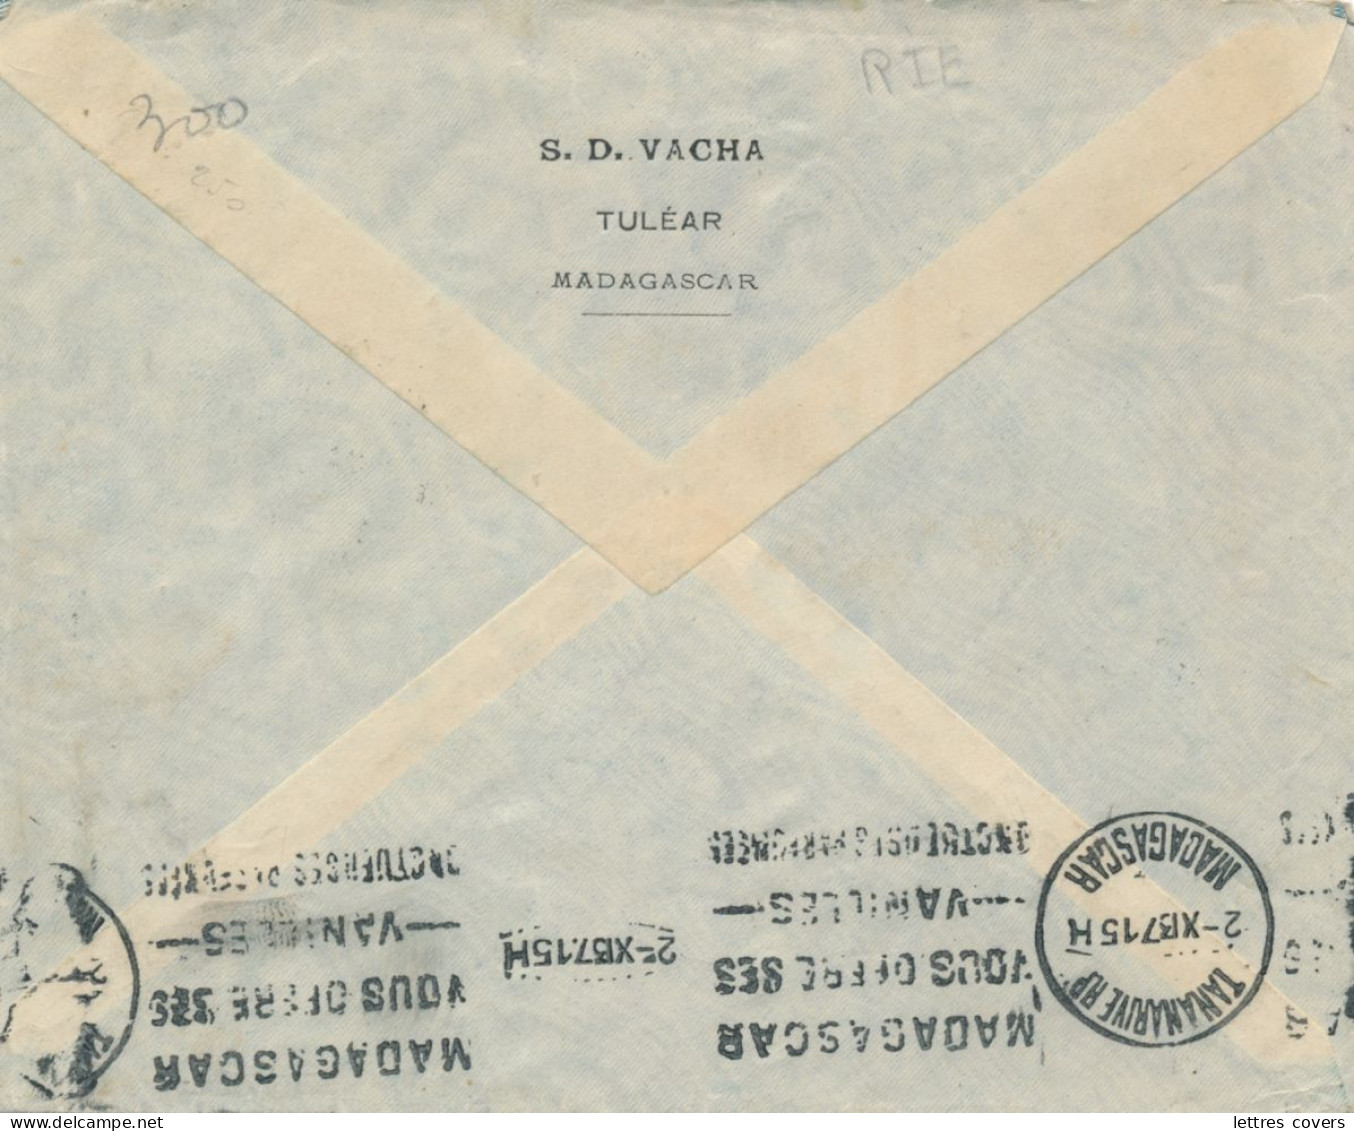 1937 MADAGASCAR PREMIER VOL HEBDO TANANARIVE ET SUD DE L'ILE 6 LIGNE FRANCE CONGO TULEAR 29/10/37 AVION - Airmail